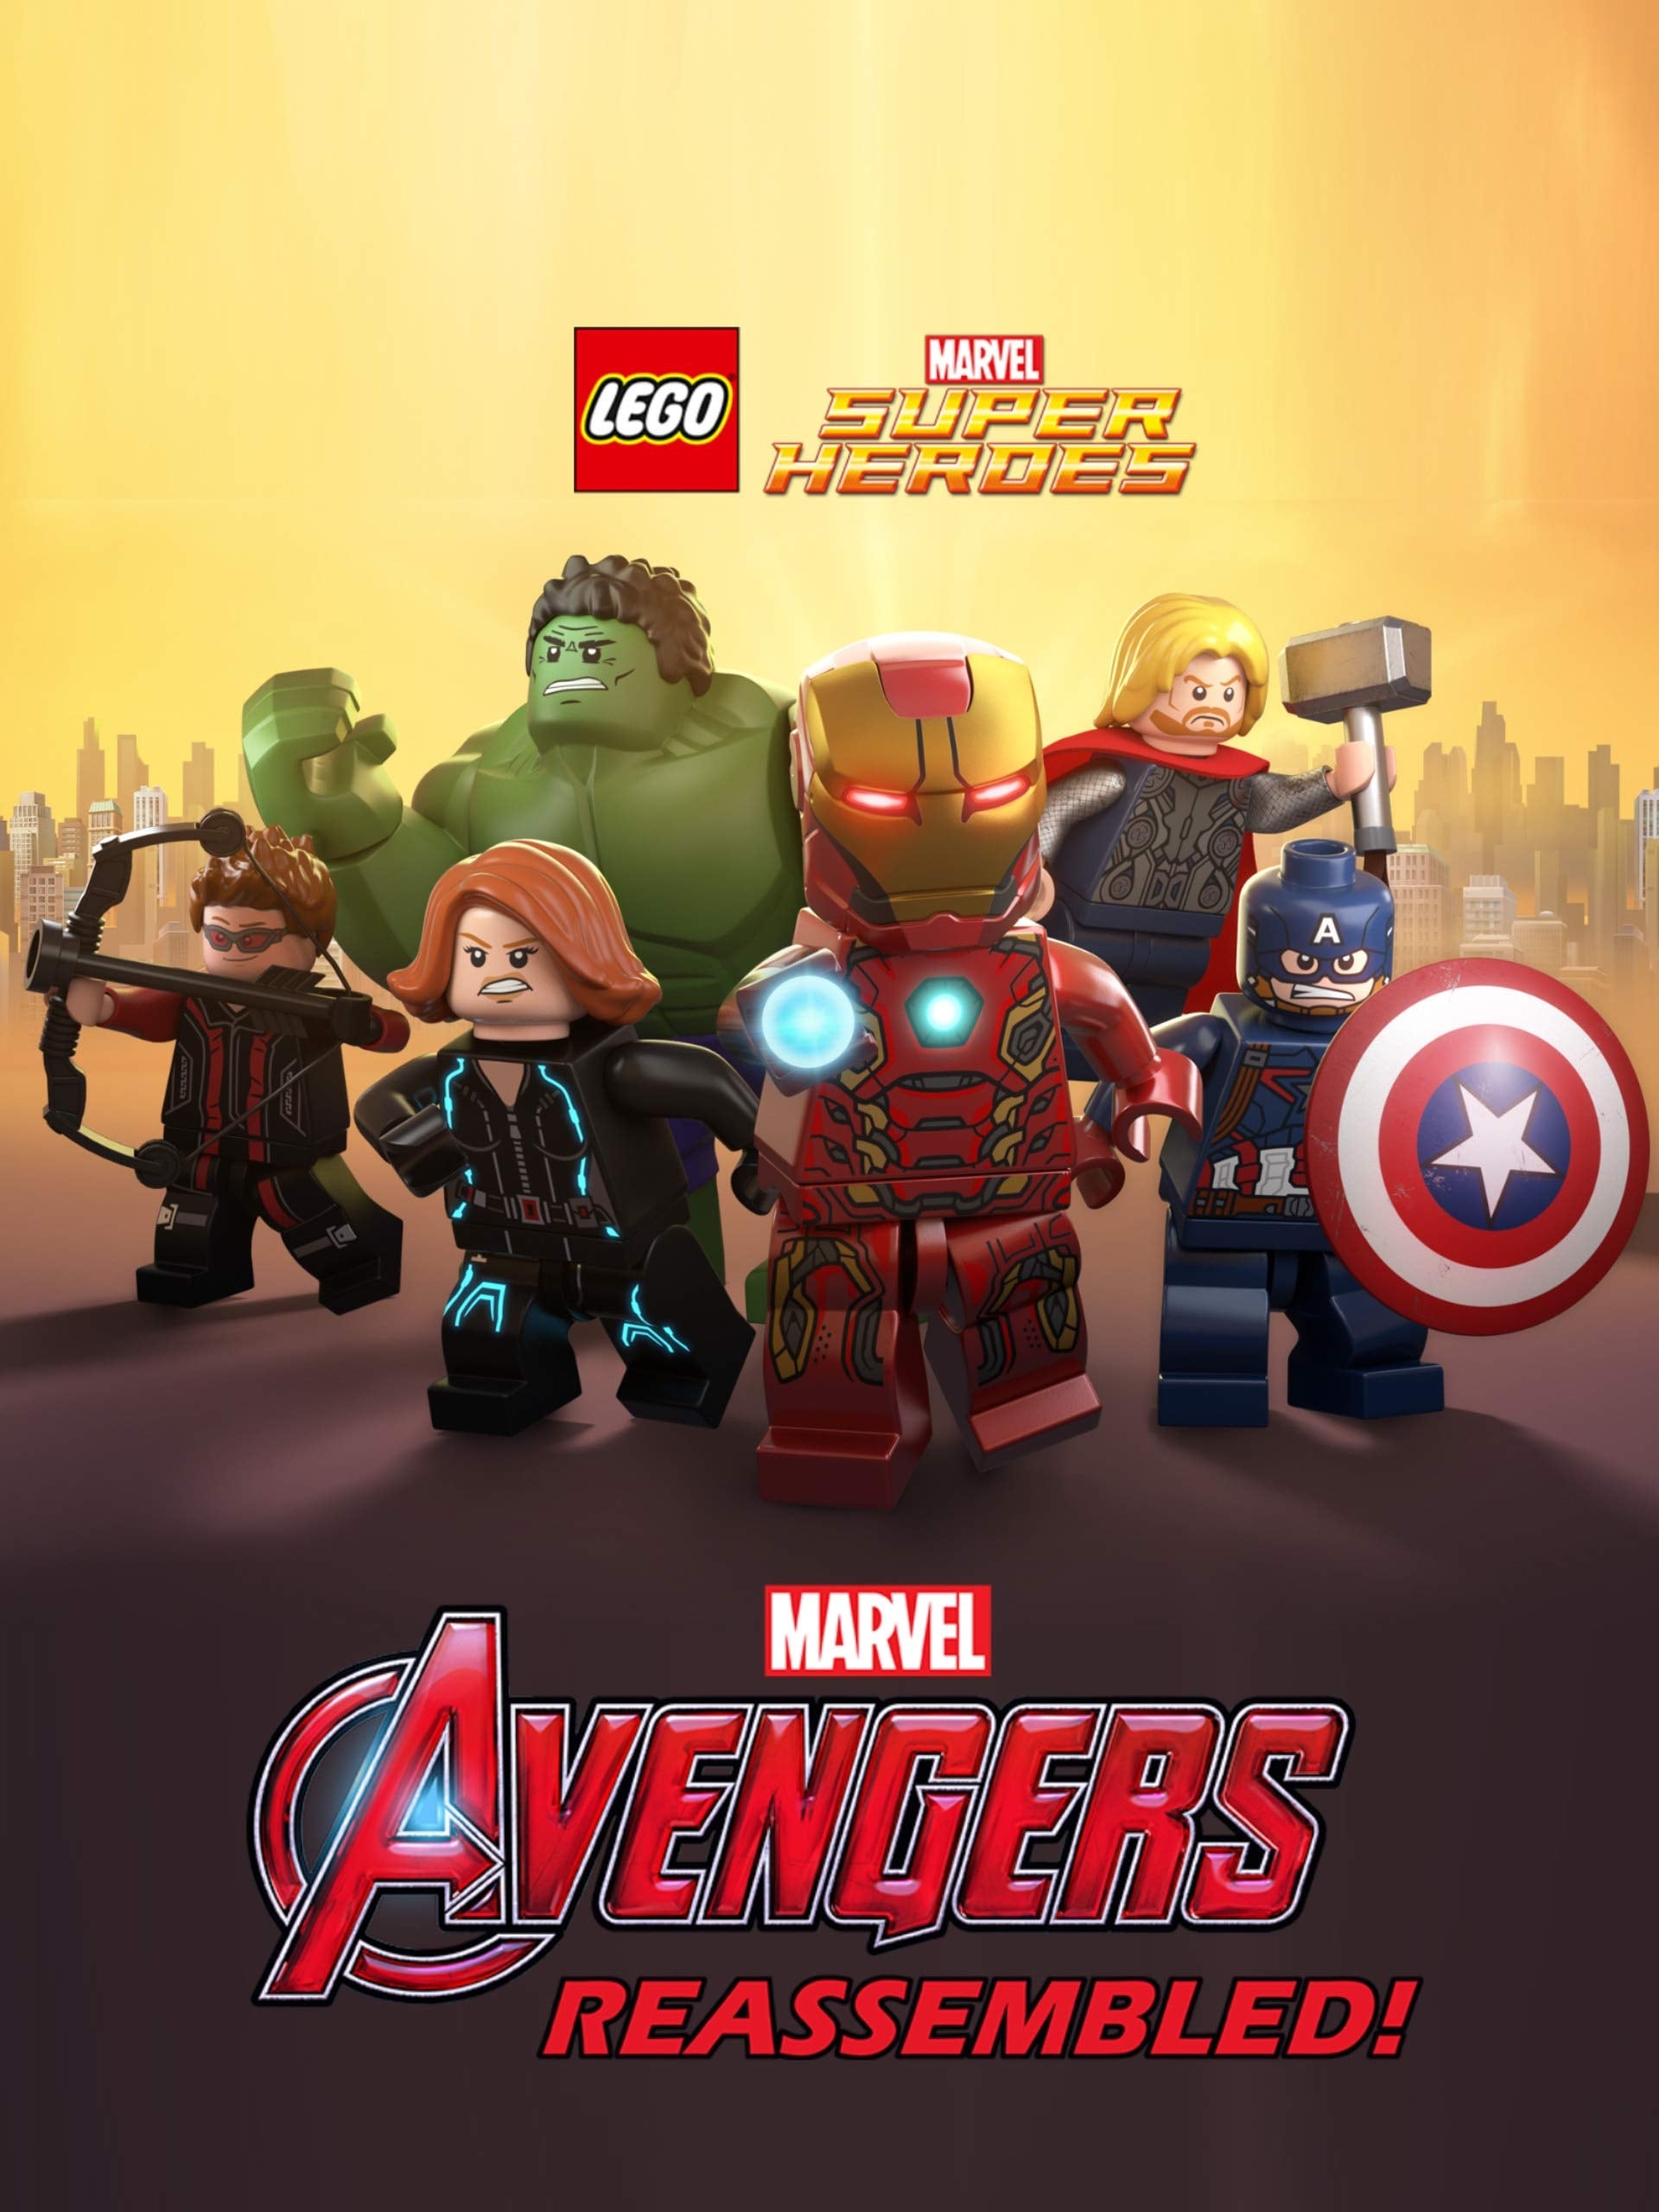 LEGO Marvel Superhelden - Avengers neu montiert!